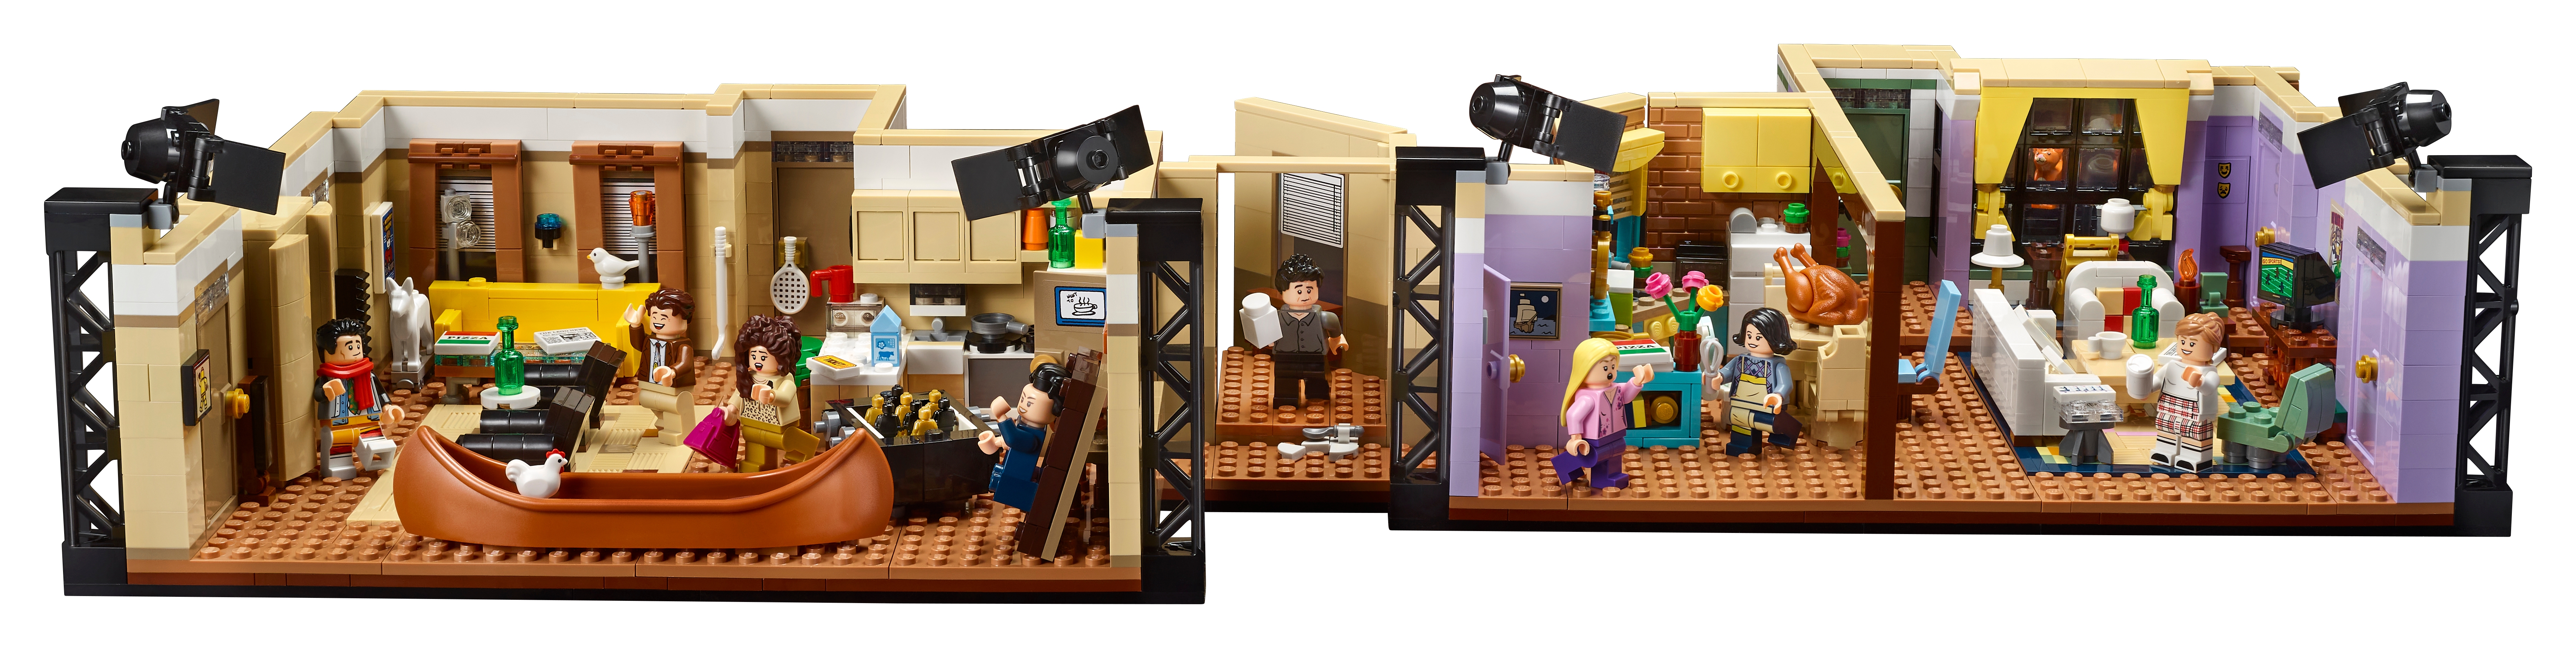 F.R.I.E.N.D.S Apartments - About Us - LEGO.com